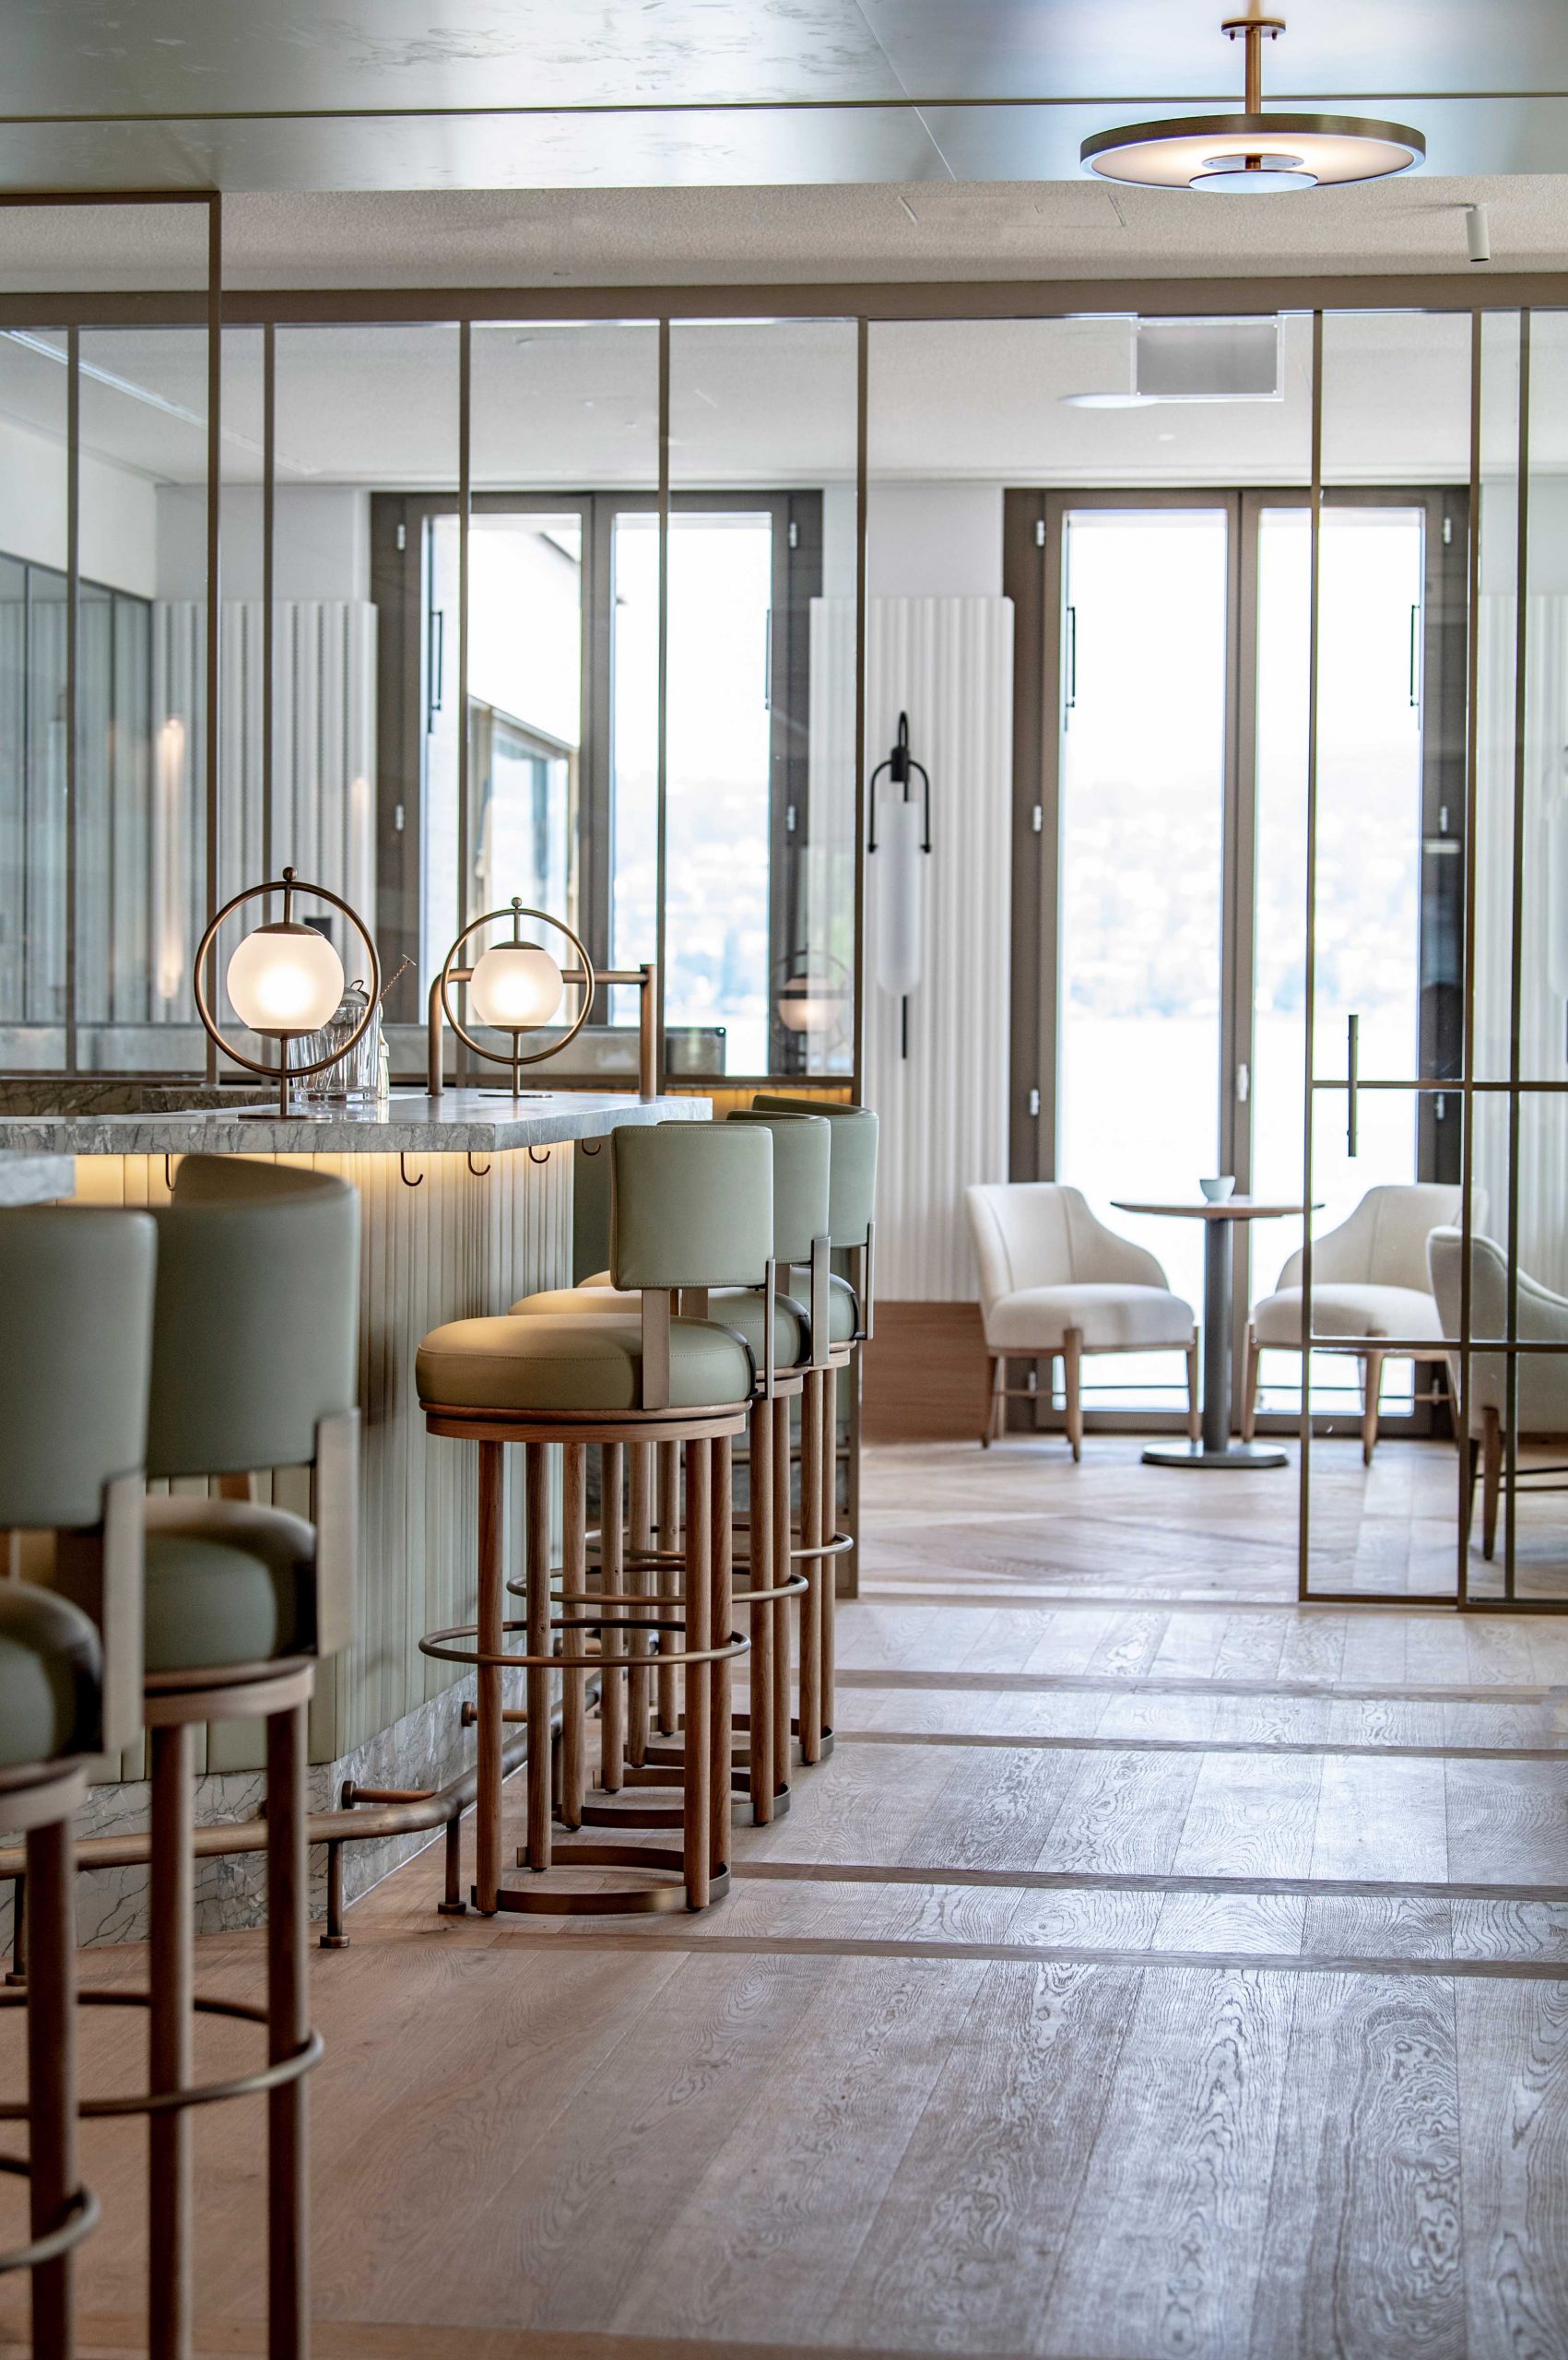 Elegant bar area stools and glass sliding doors view